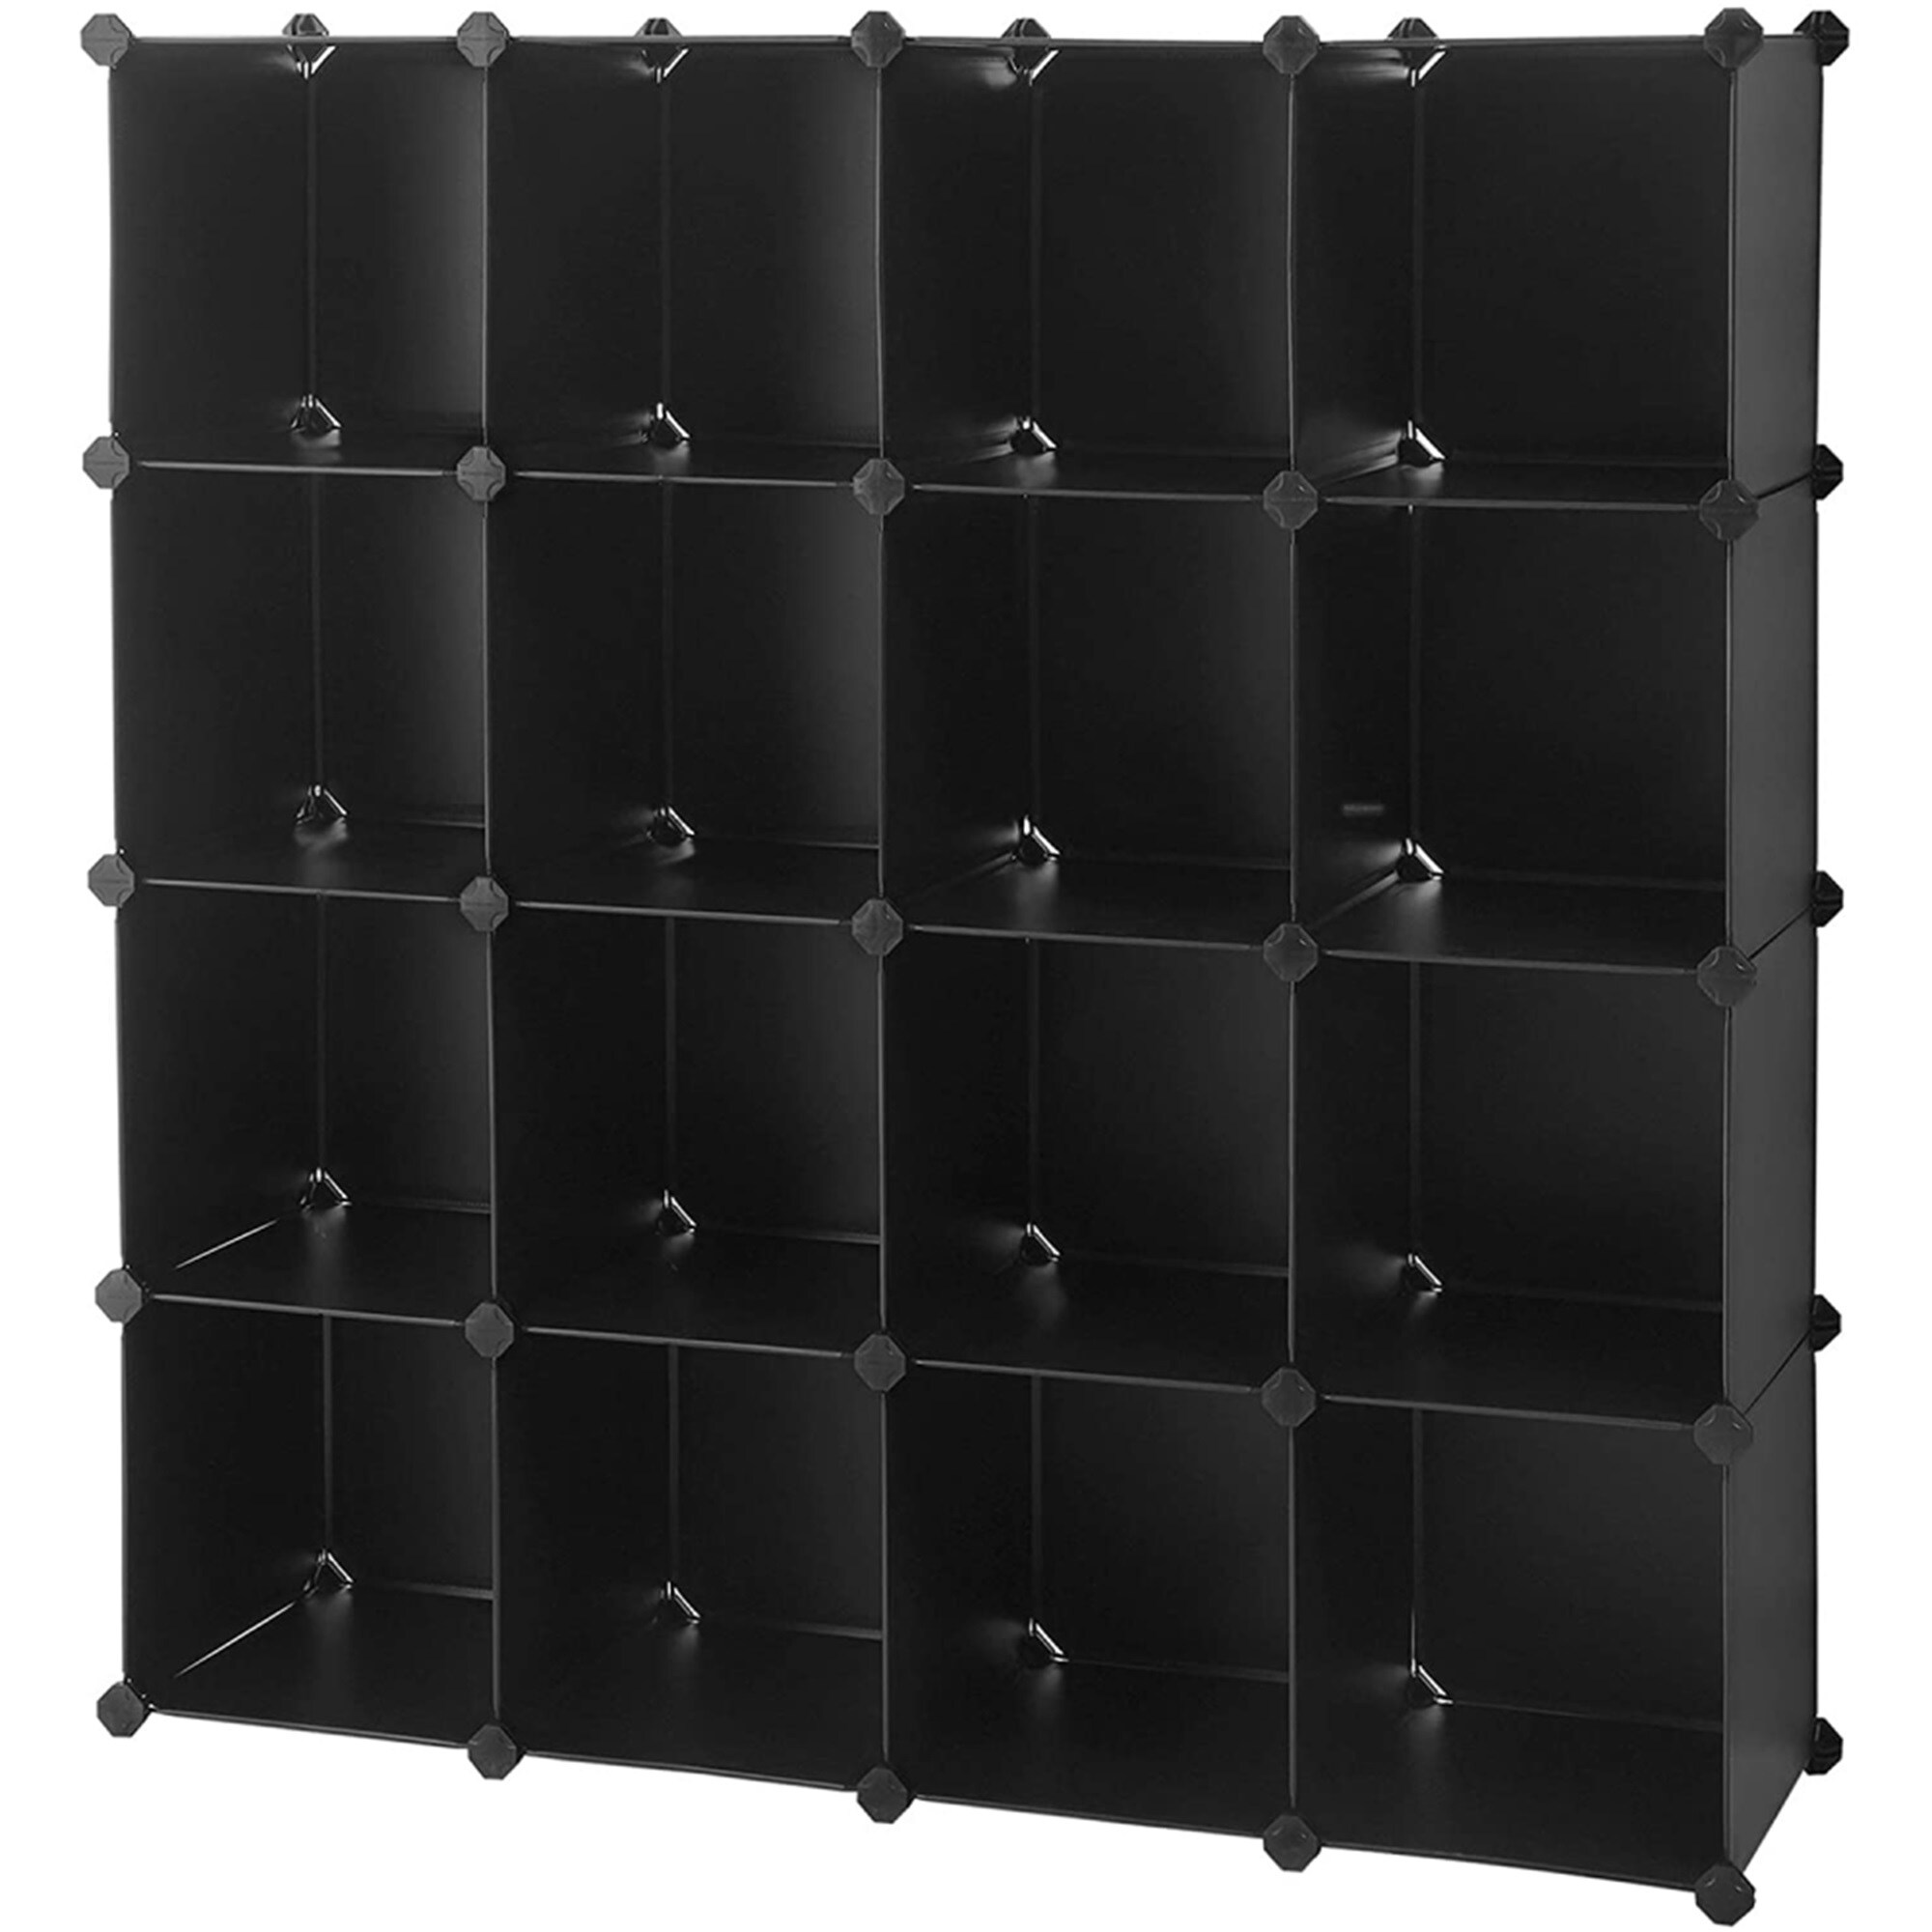 6-16 Cubes Wardrobe Storage Organizer Closet Shoes Clothes Shelving Rack Shelf 